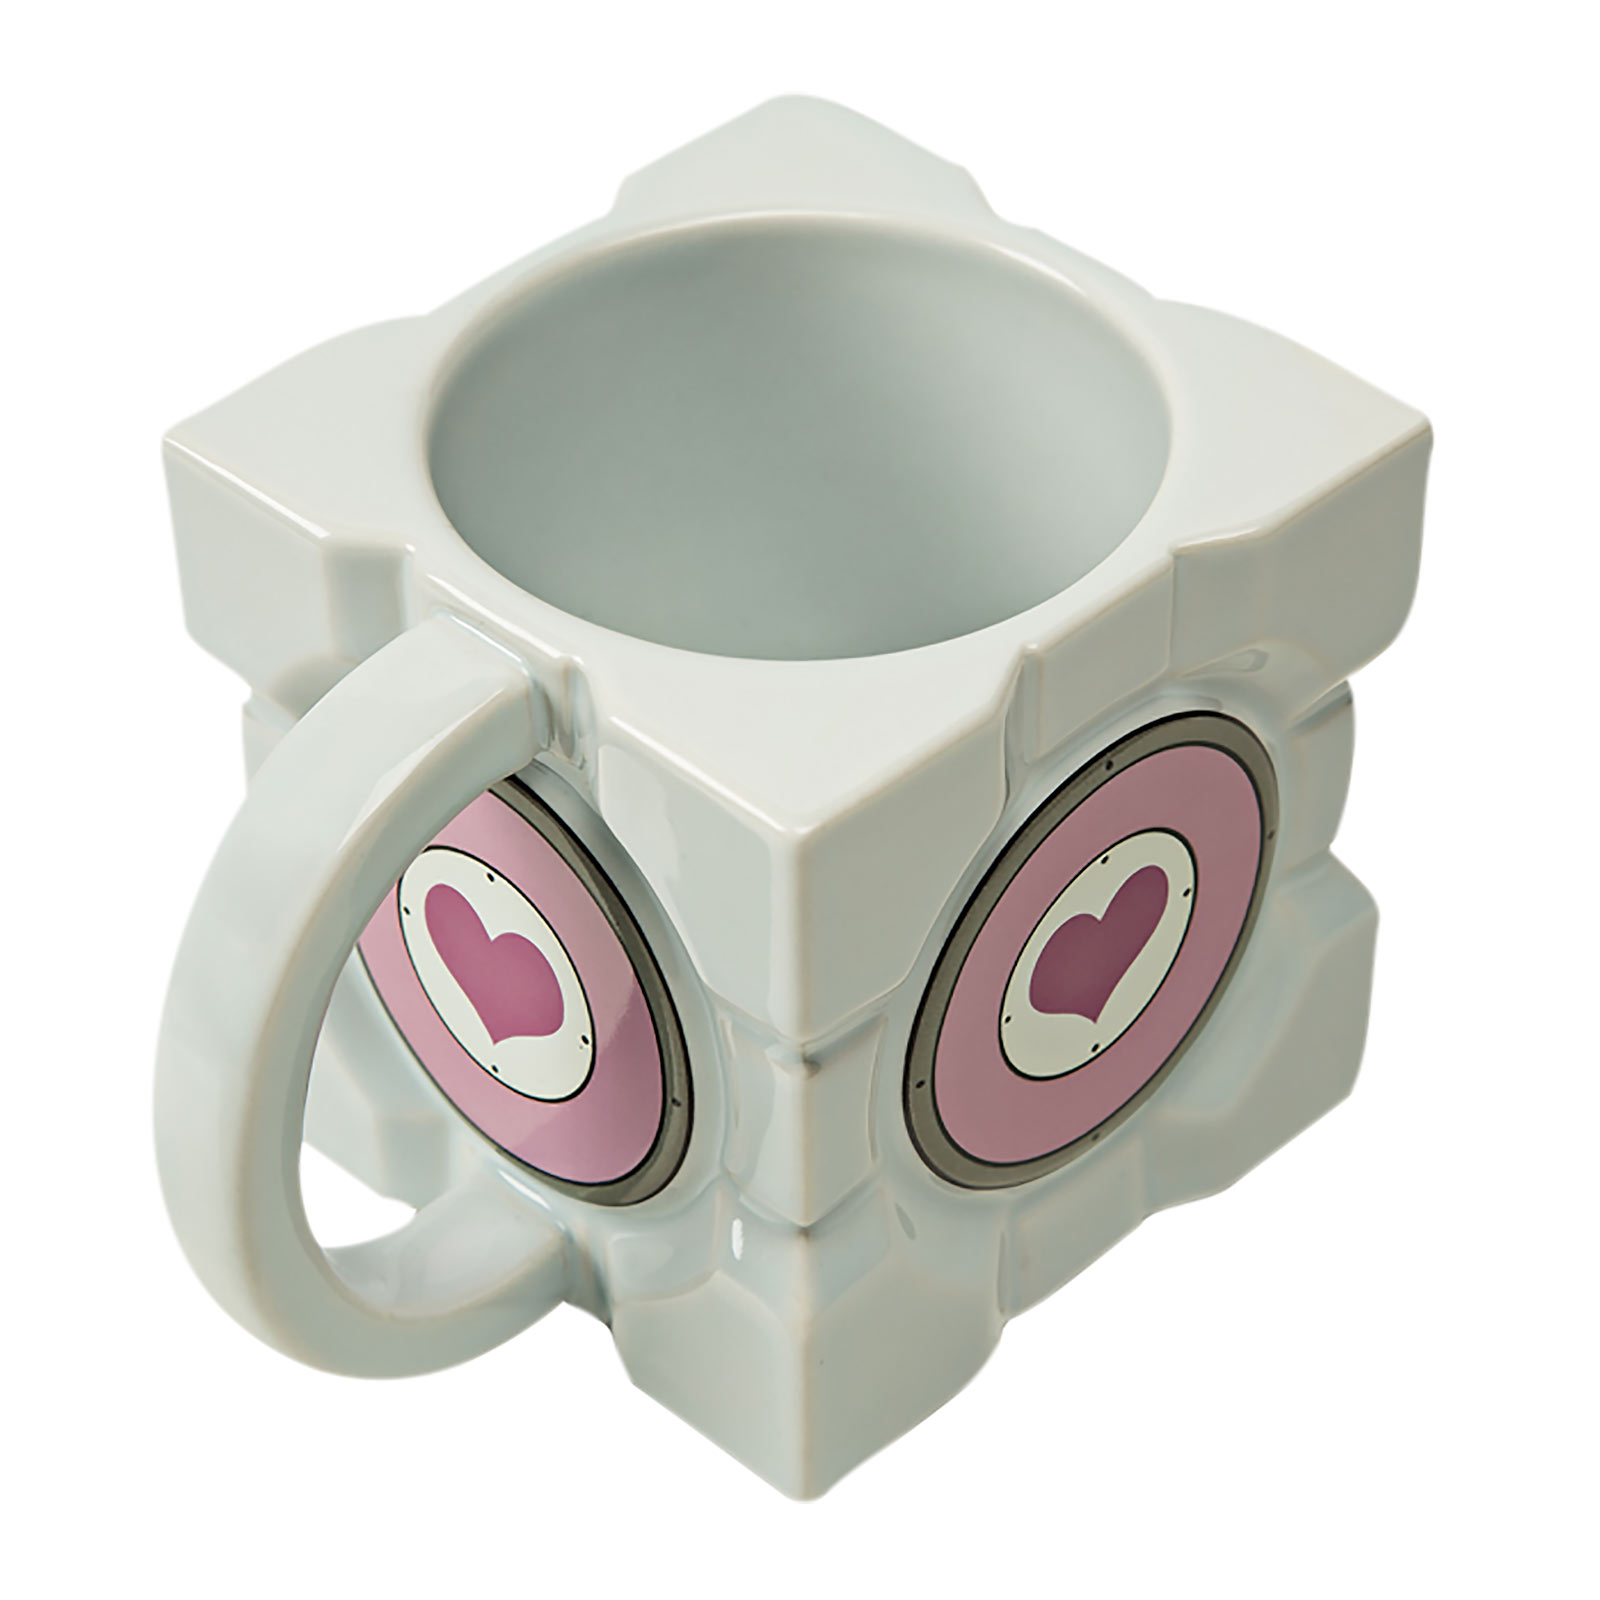 Portal 2 - Tasse Companion Cube